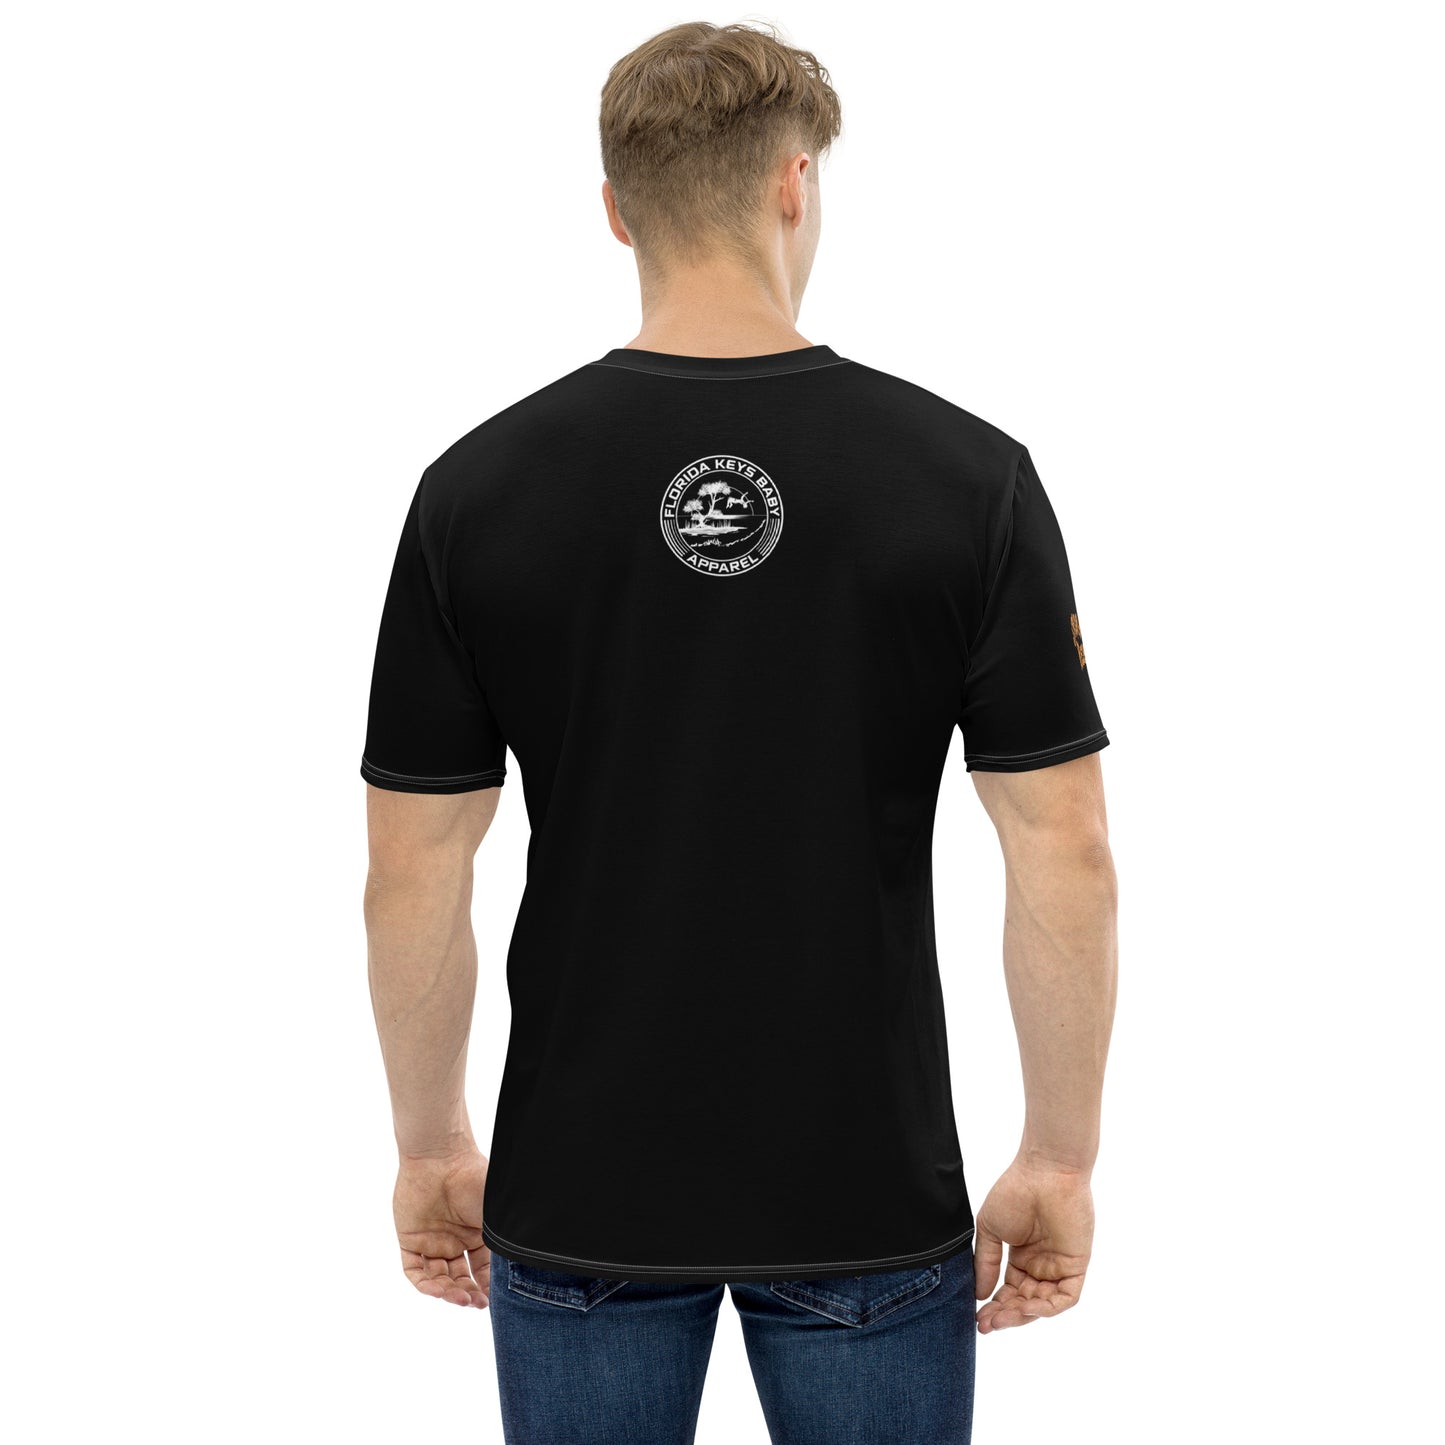 Skorall Reef T-shirt